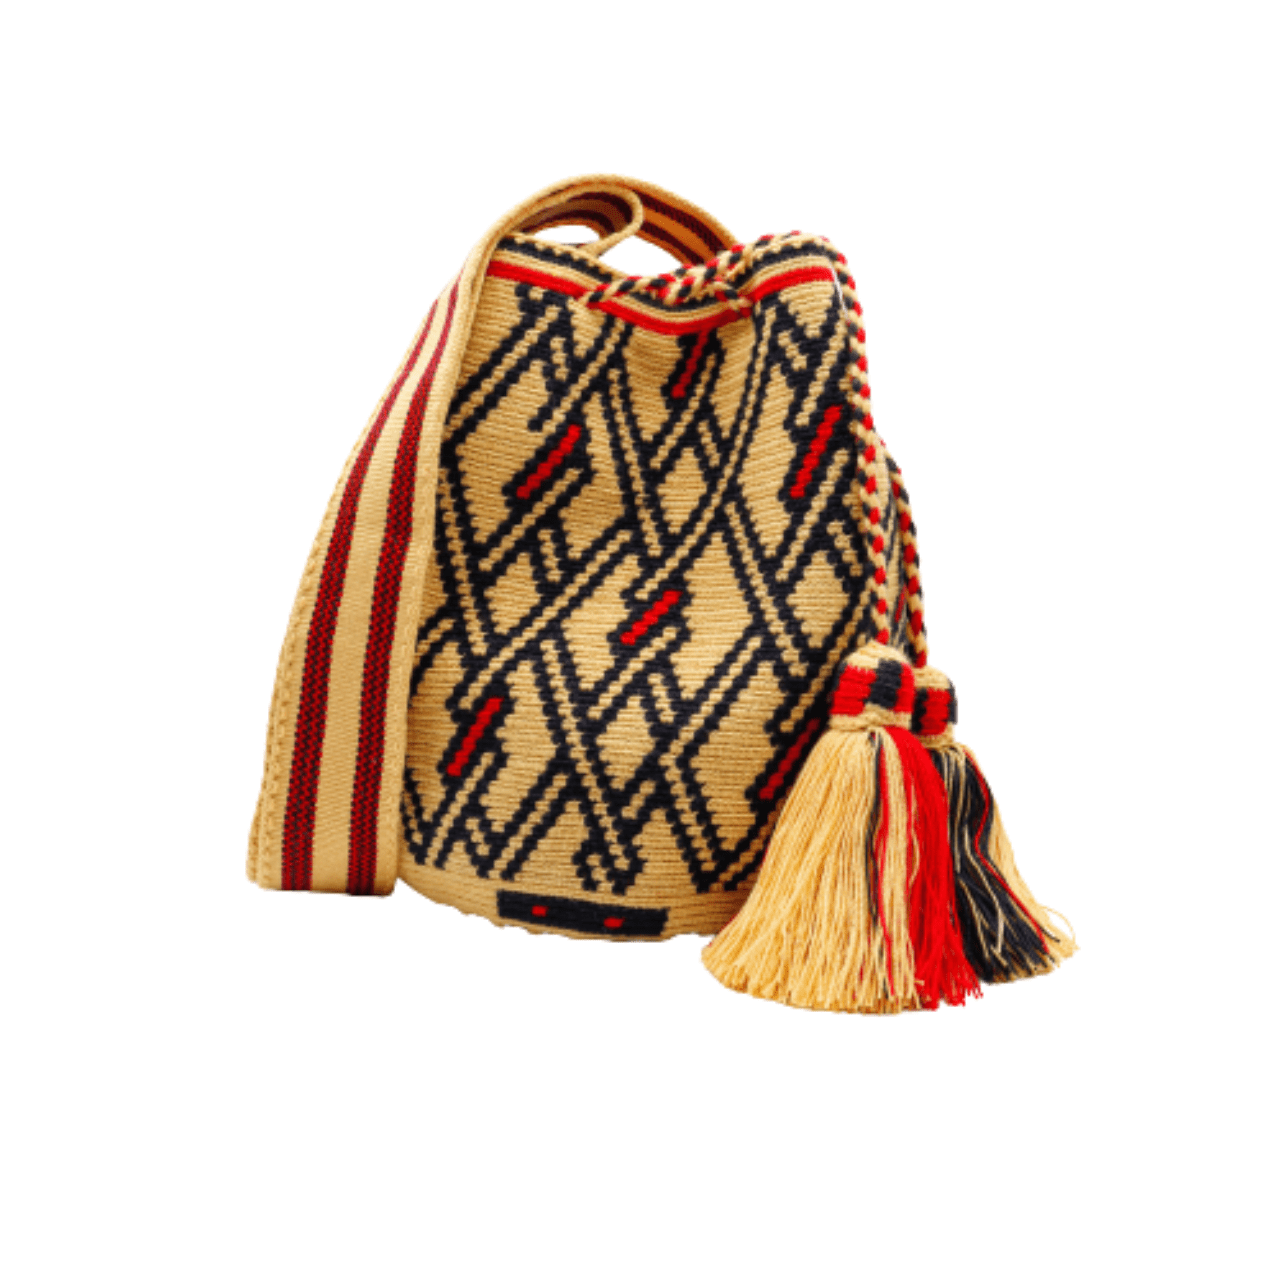 Wayuu Mochila Bags Crochet Woven Handmade Authentic Colombian Boho Bags  Colorful